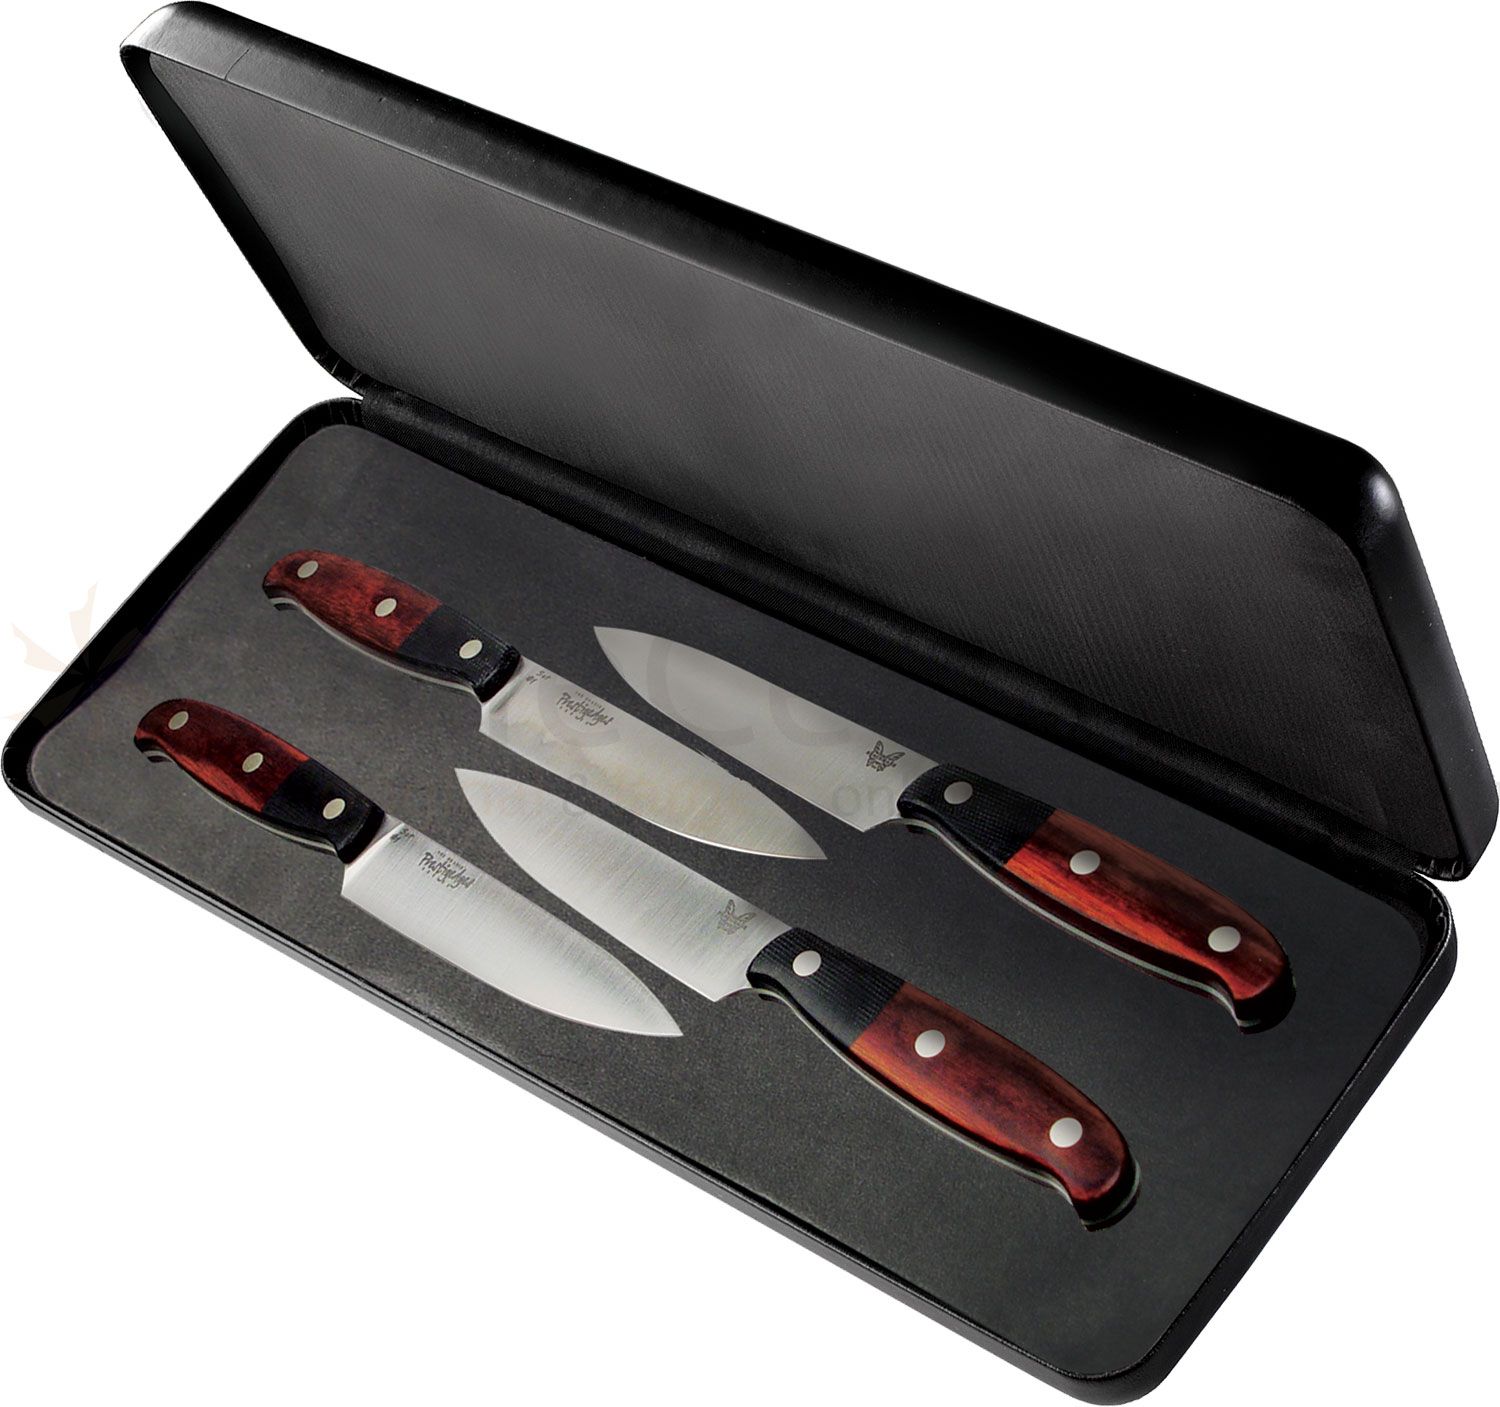 Benchmade Kitchen Knives Gold Class Prestigedges Chef Set 4501